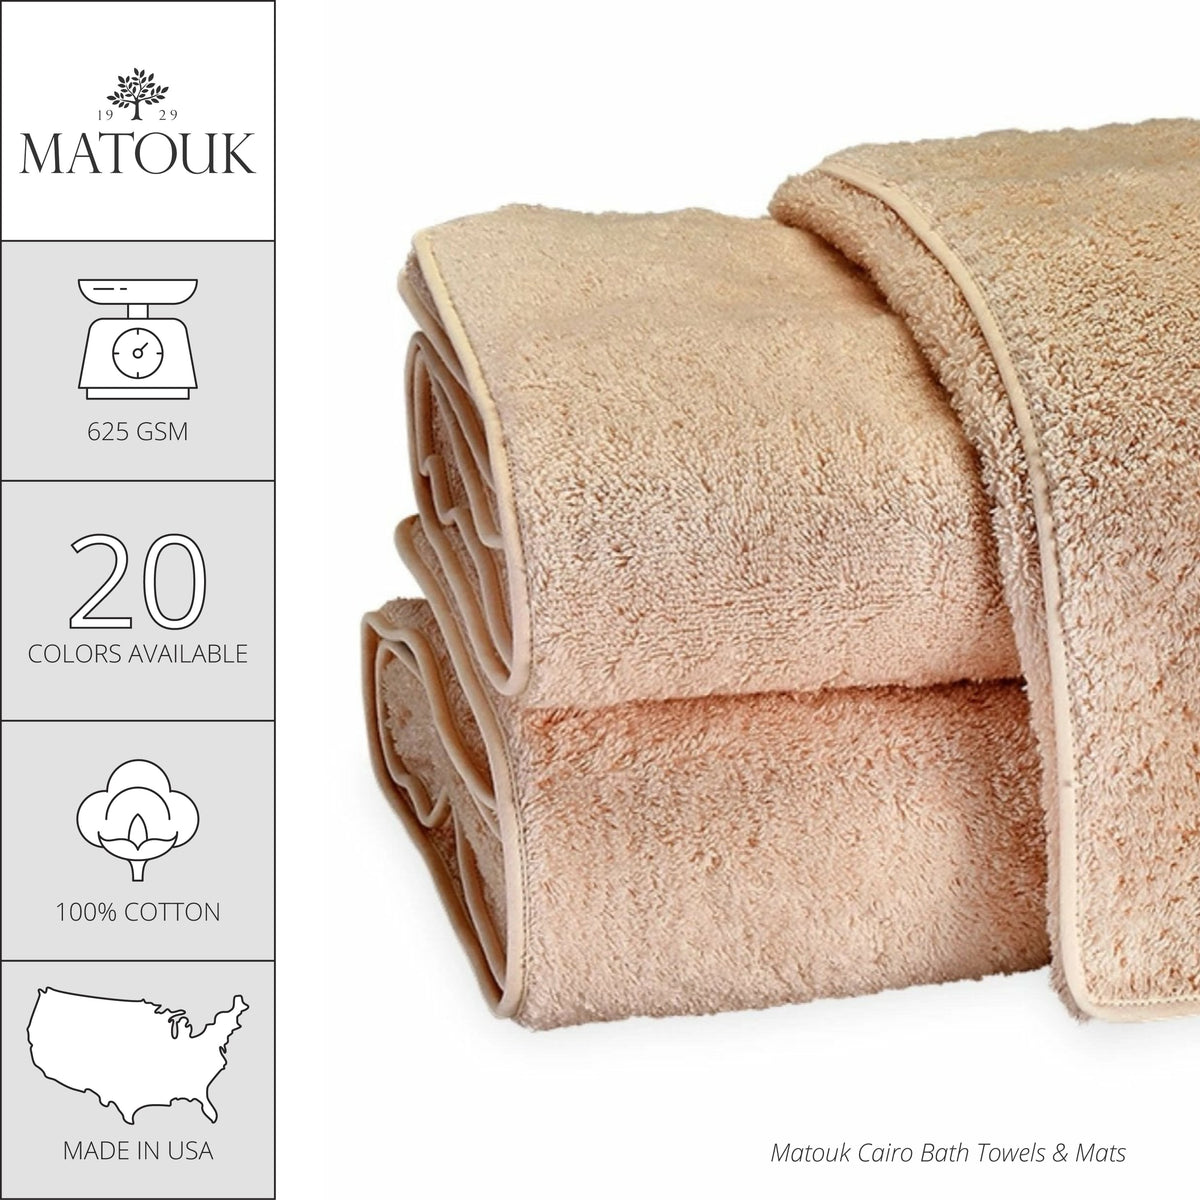 Matouk Cairo Bath Towels and Mats - White/Navy